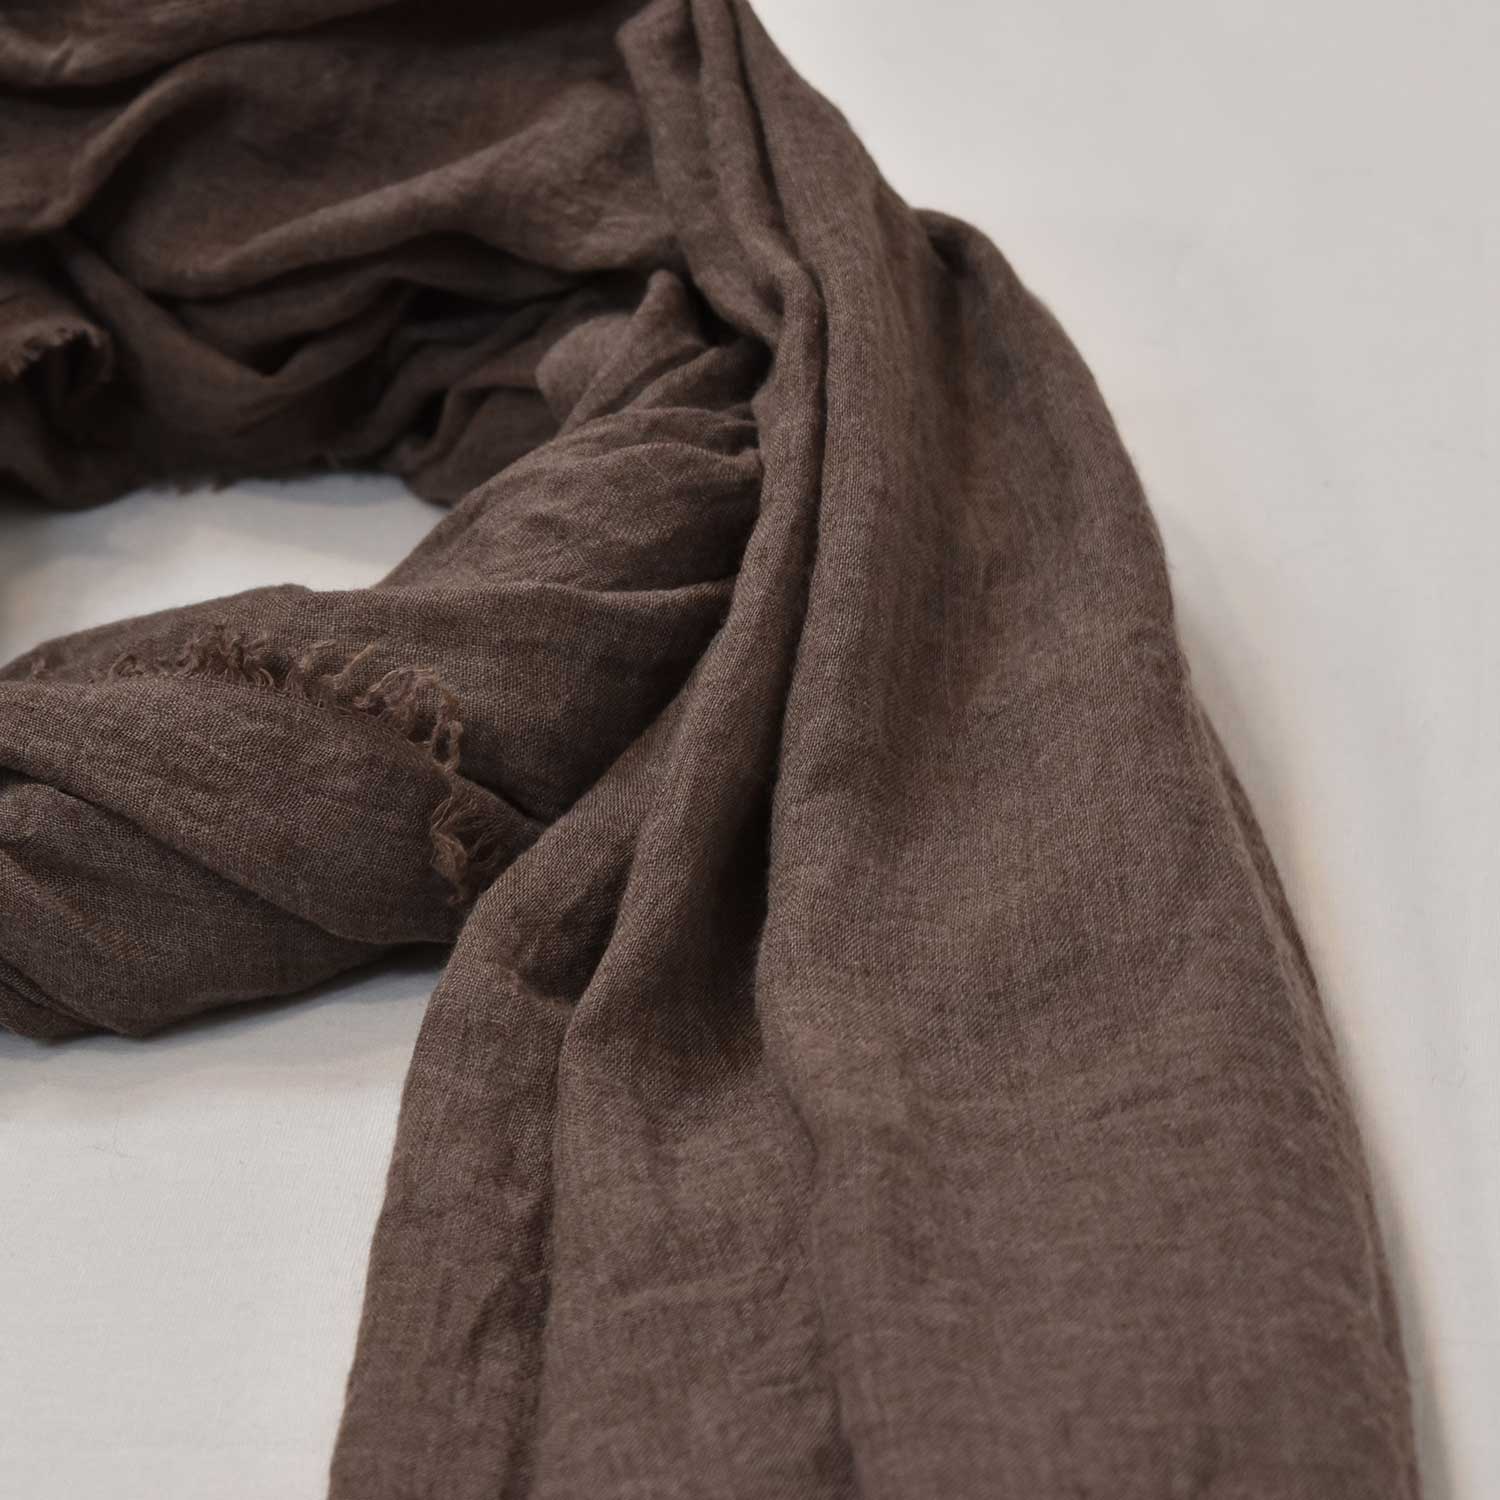 Brown Plain frayed scarf